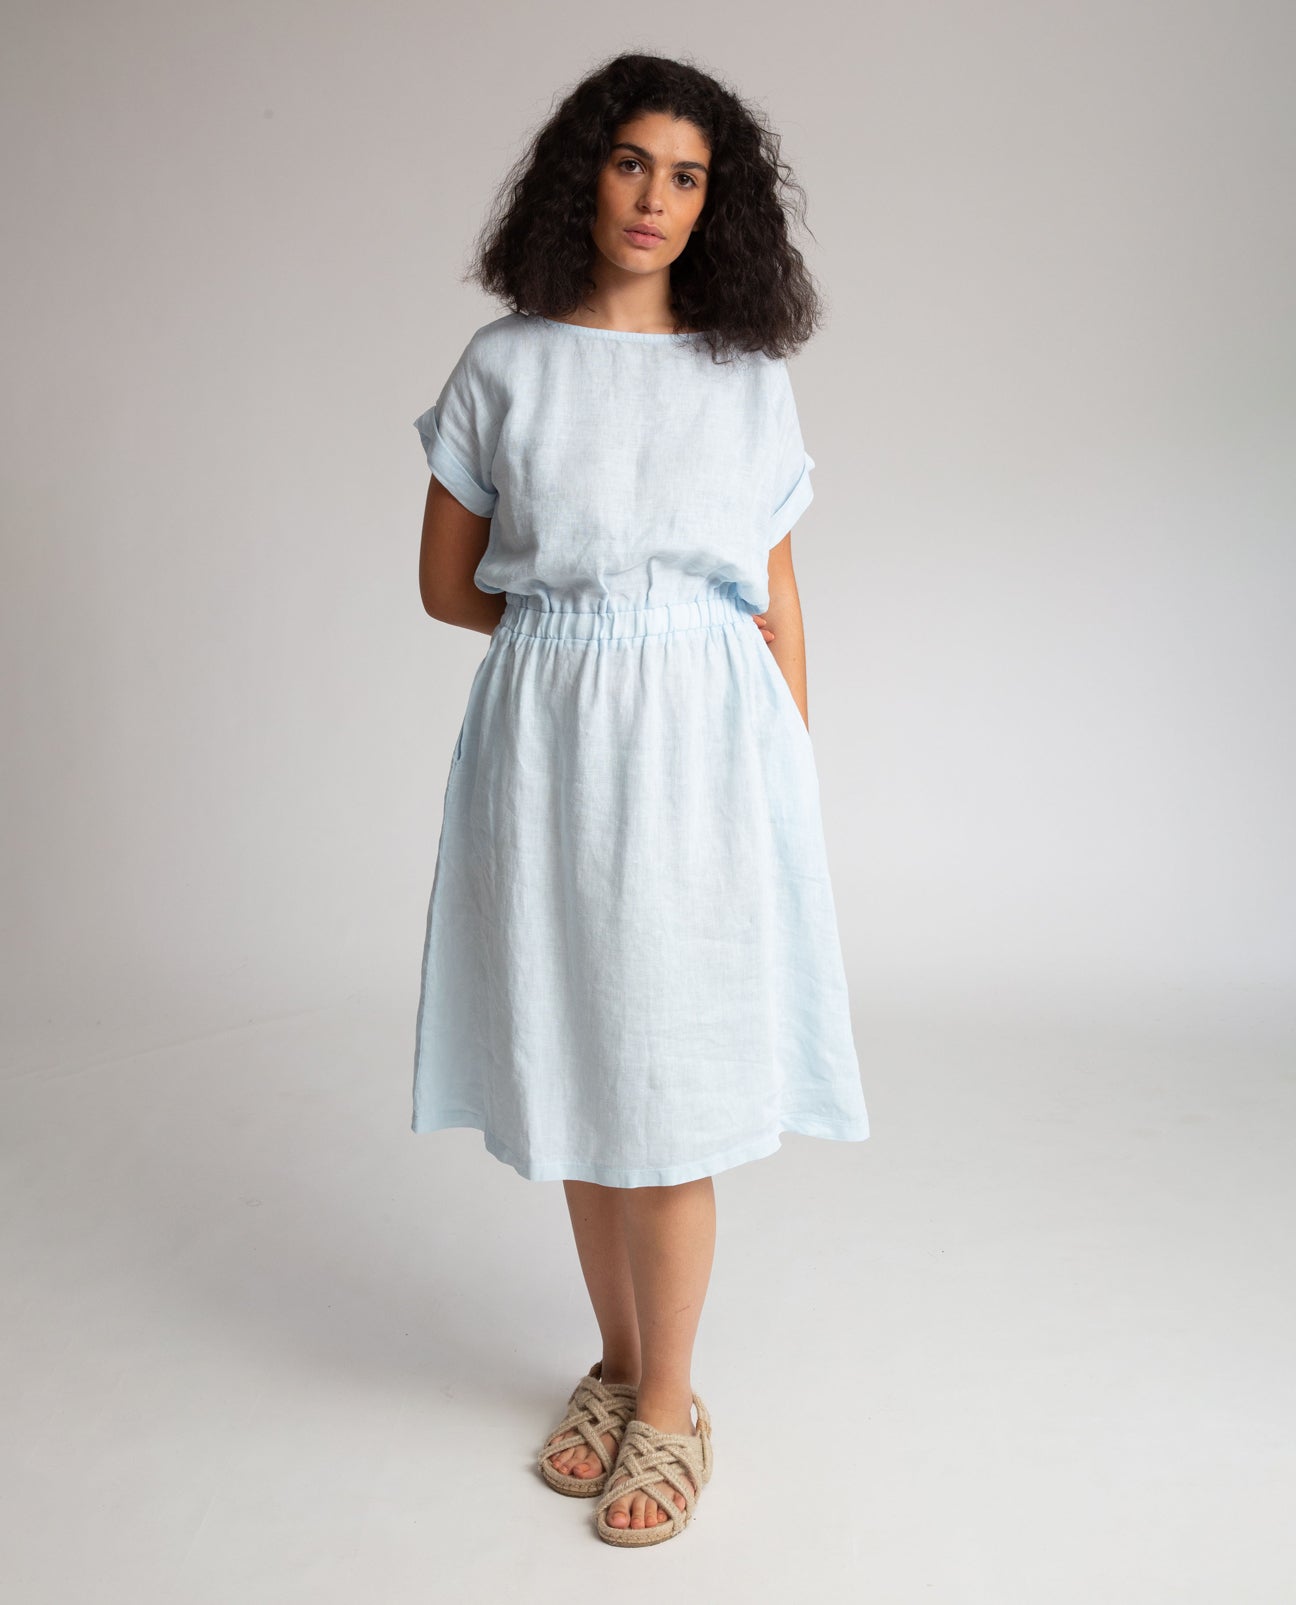 Marissa-May Linen Dress in Pale Blue